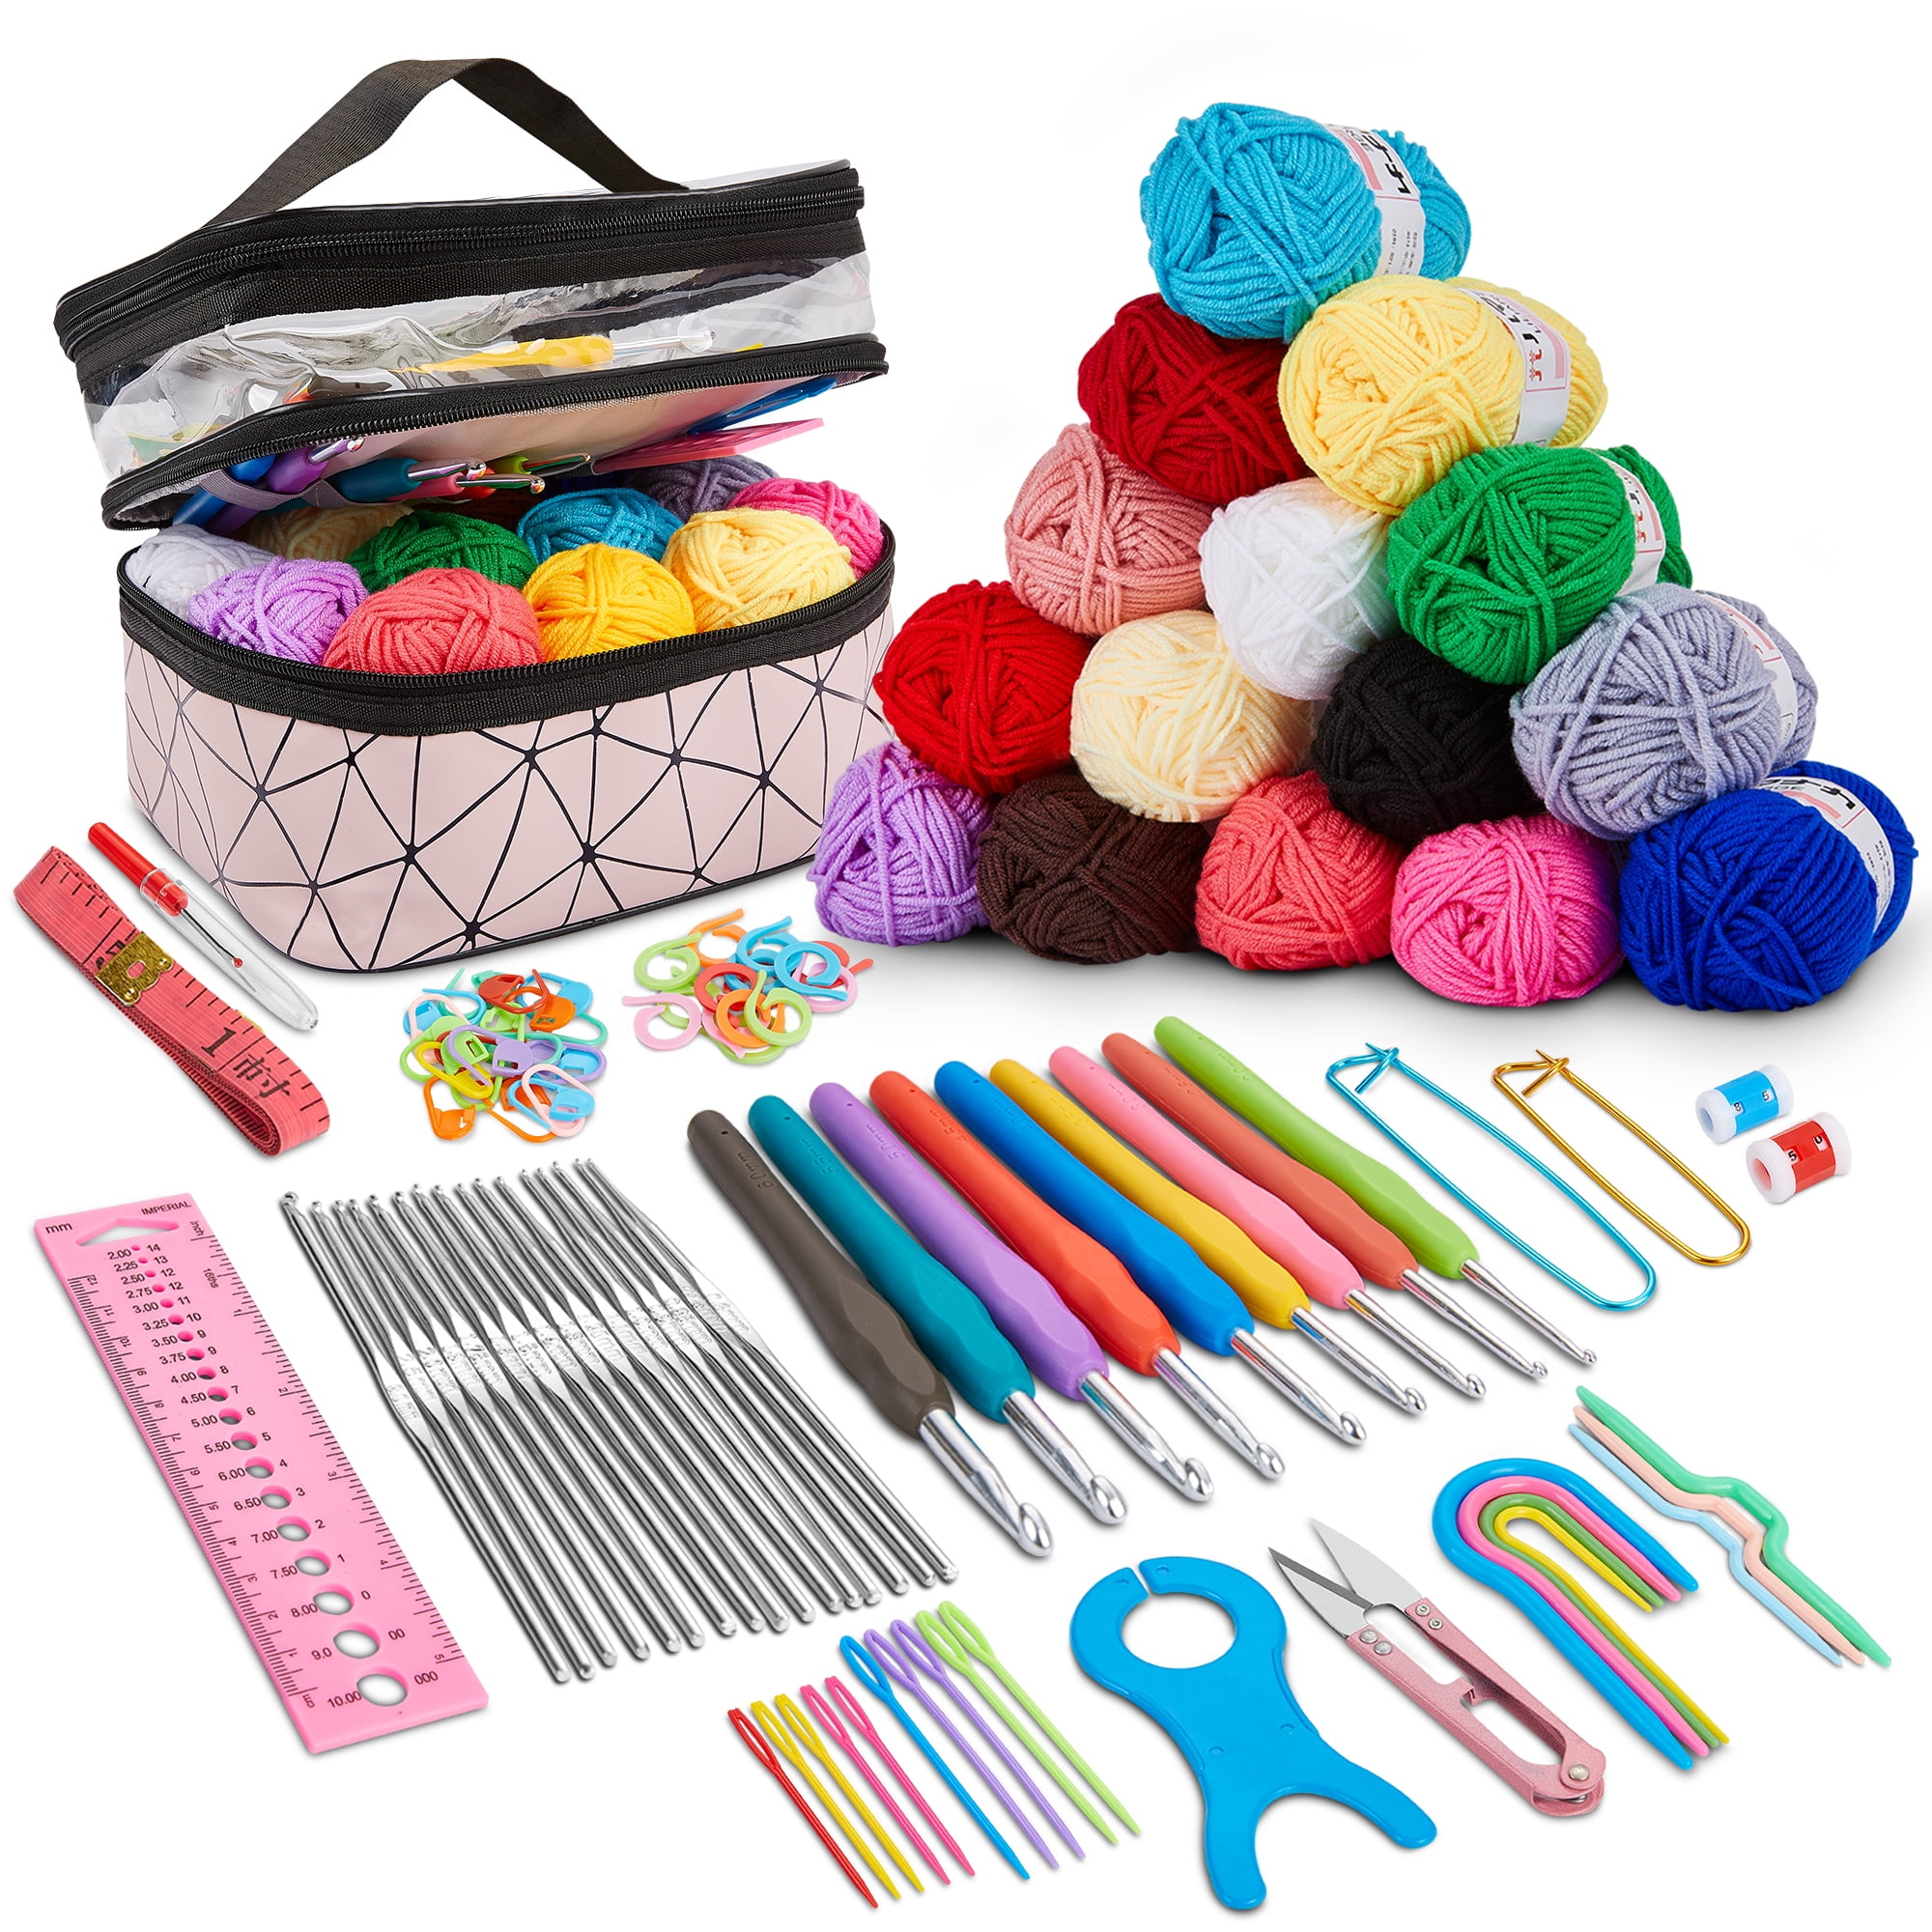  Aeelike Crochet Kit with Yarn, Beginners Crochet Kit for Adult  Kids Include Rubber Soft Grip Crochet Hooks,Knitting Supplies DIY Tools for  Crochet Lover,Starter Kit with Portable Bag Leopard Print